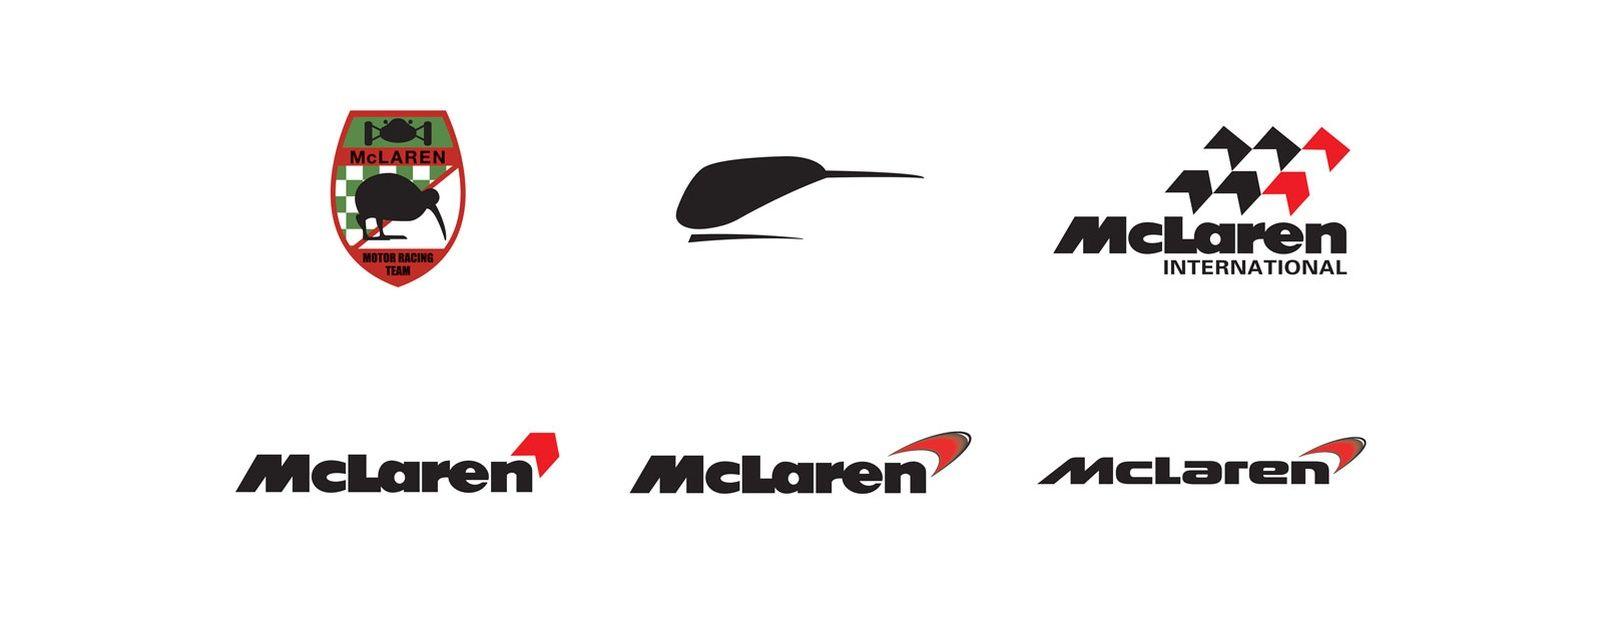 McLaren F1 Racing Logo - McLaren Formula 1 - The Speedmark